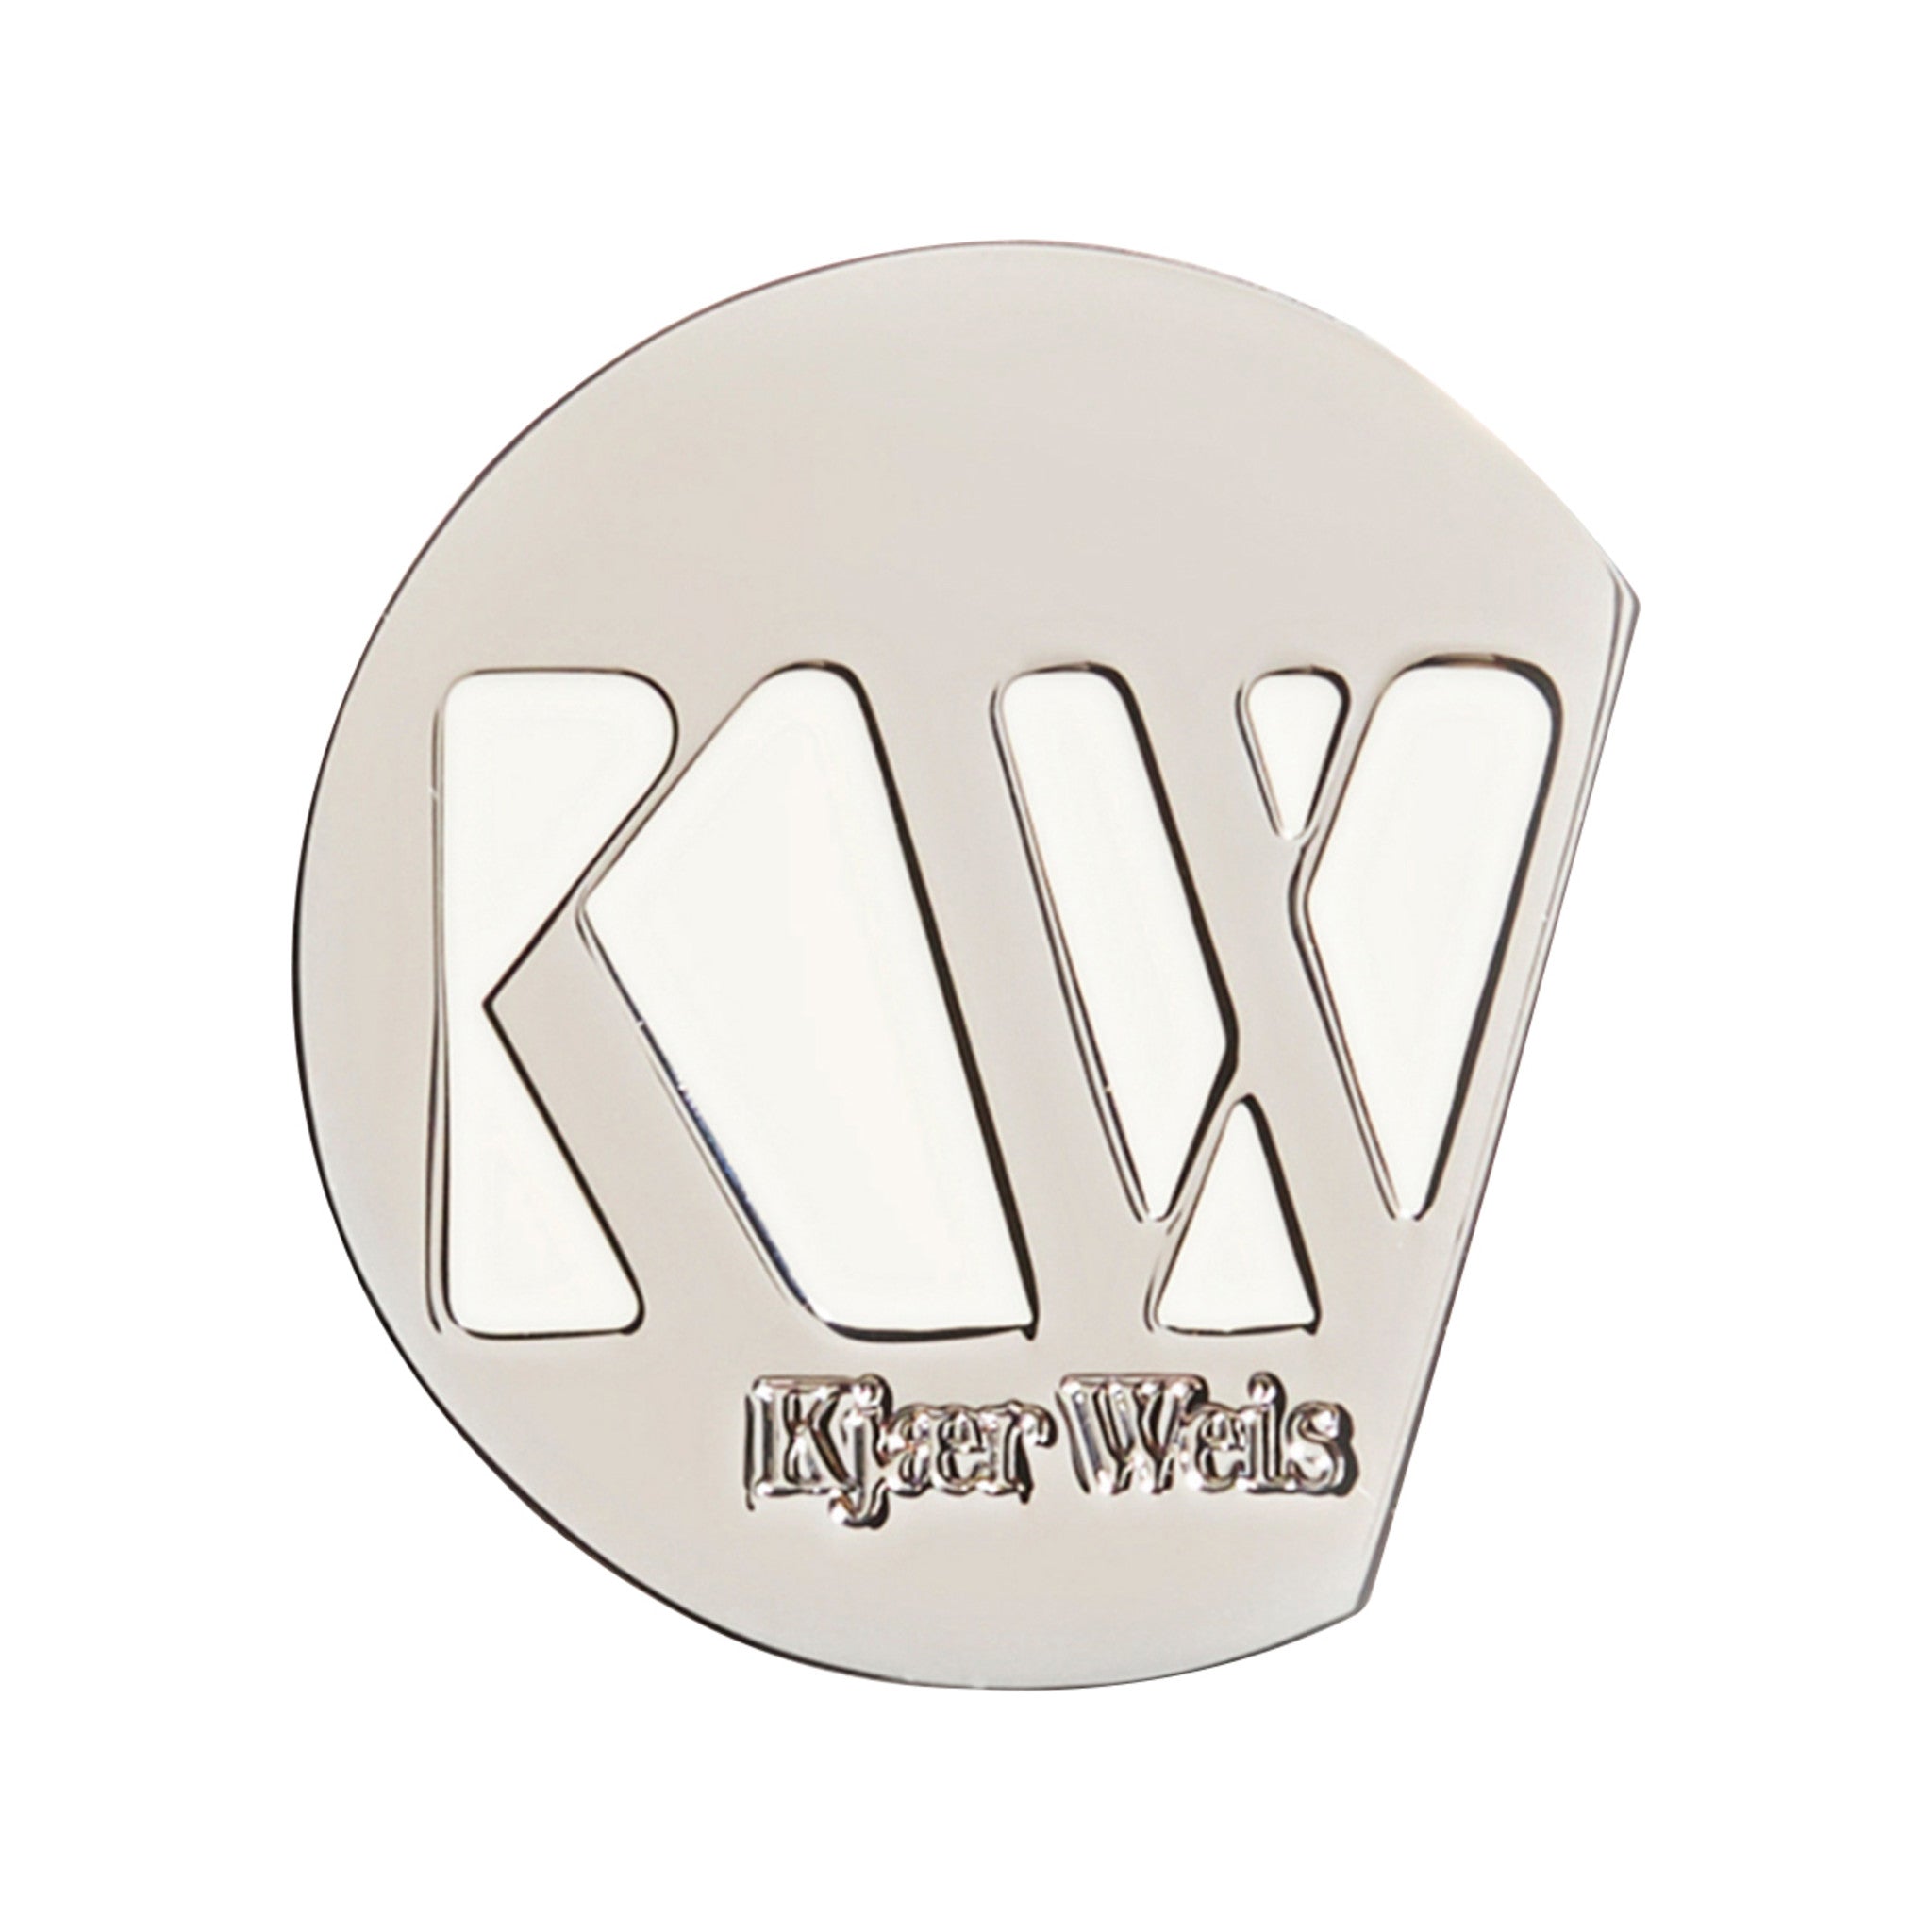 Kjaer Weis Iconic Edition Powder Eye Shadow Case main image.